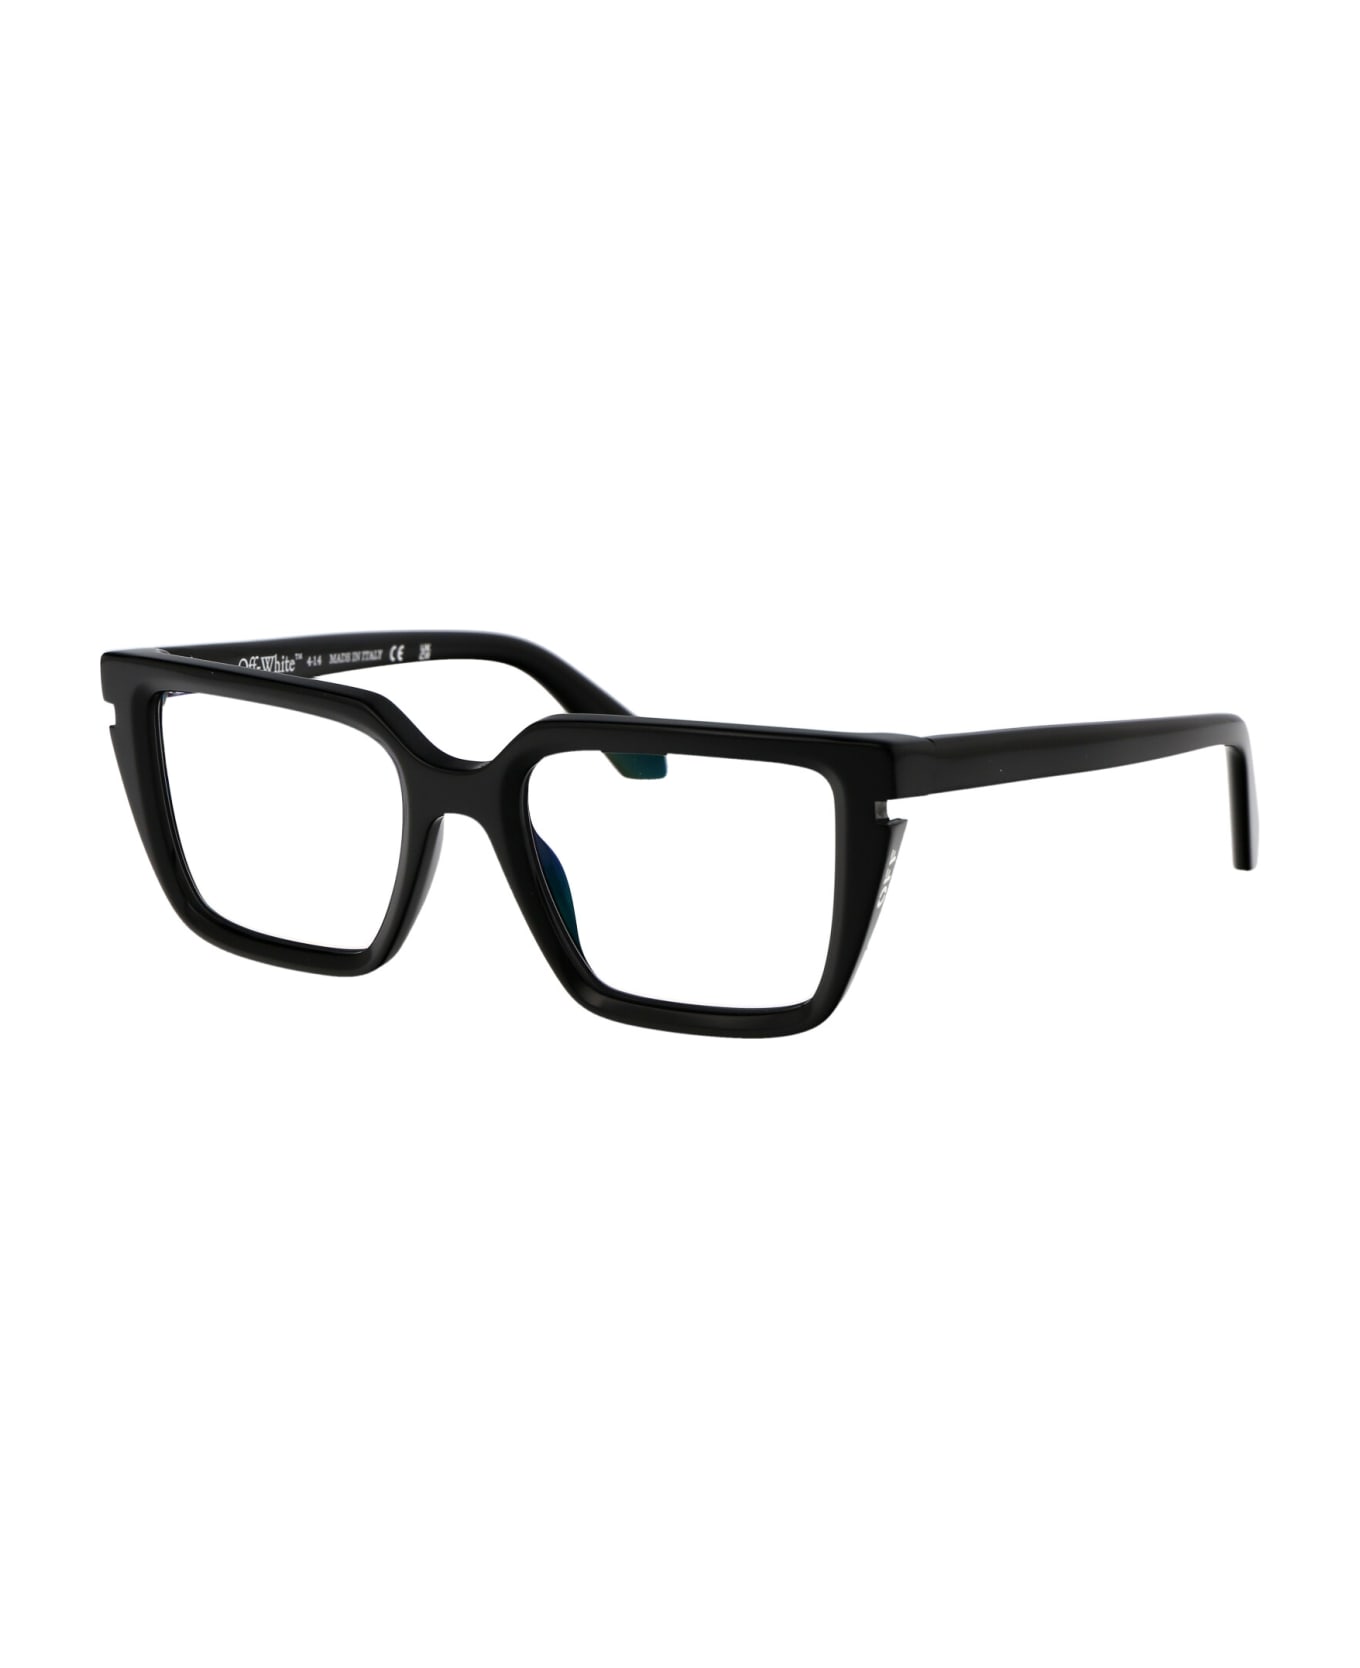 Off-White Optical Style 52 Glasses - 1000 BLACK